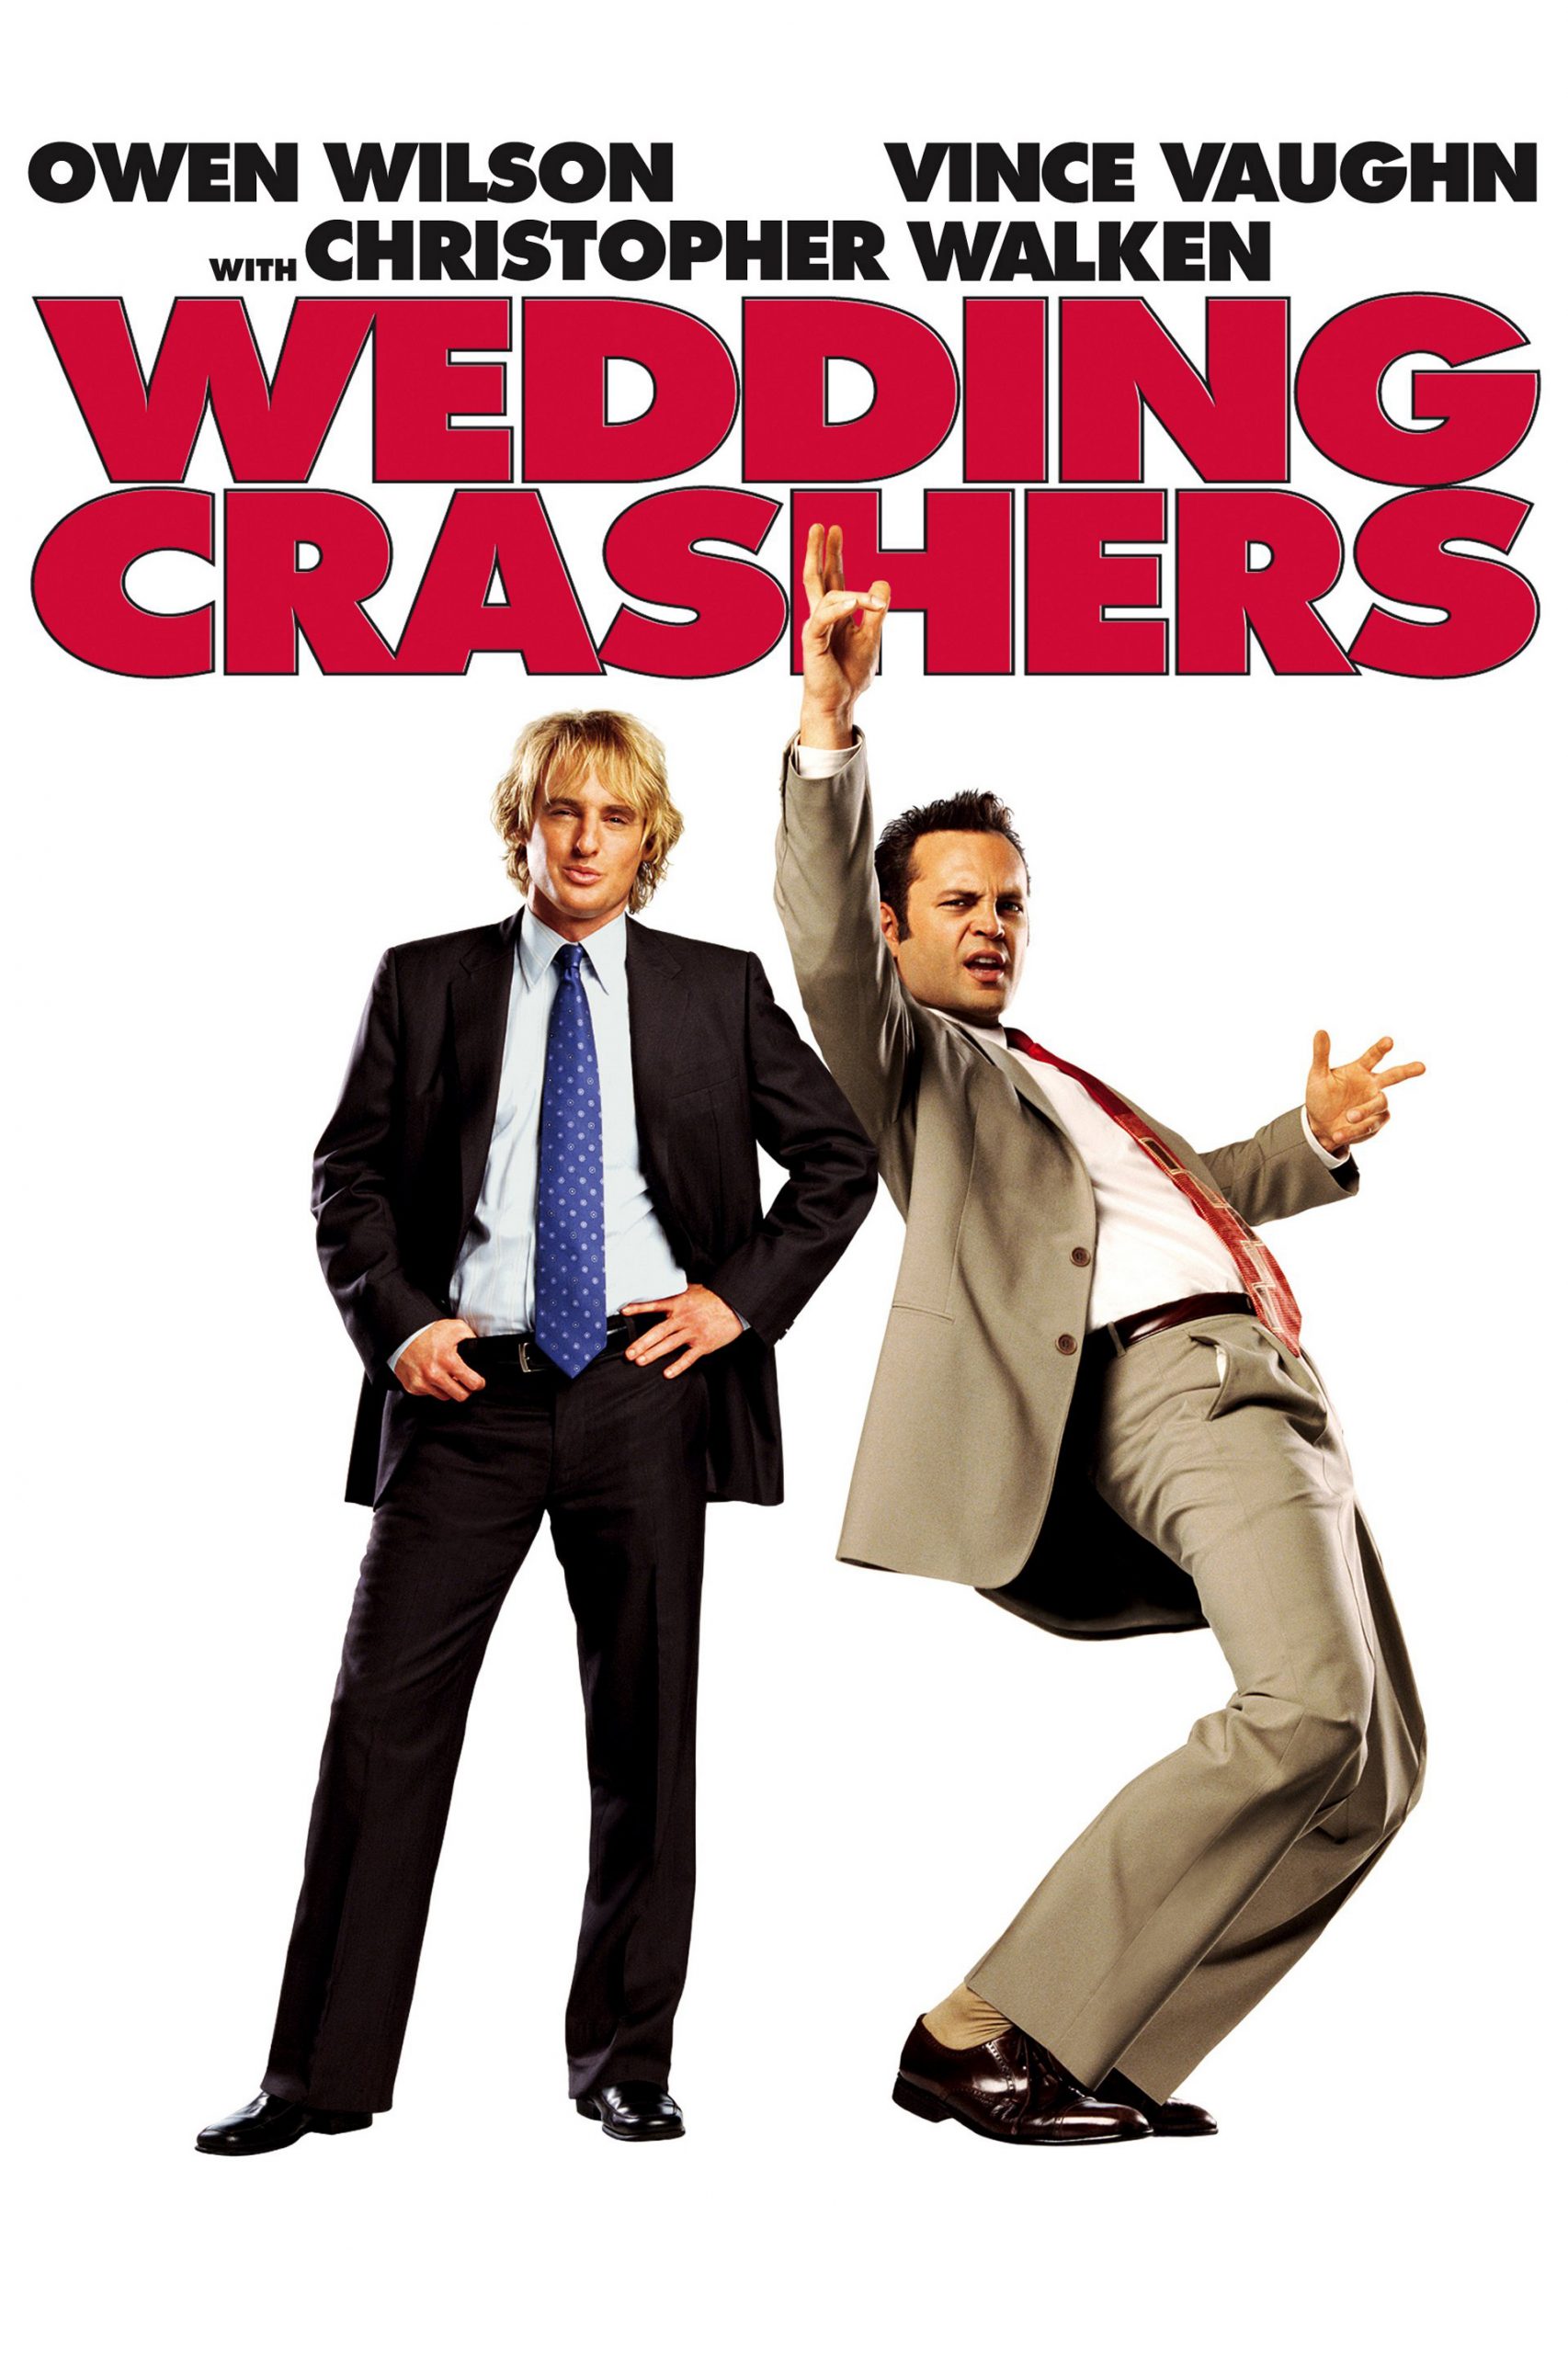 Wedding Crashers (2005) movie poster. Owen Wilson and Vince Vaughn.